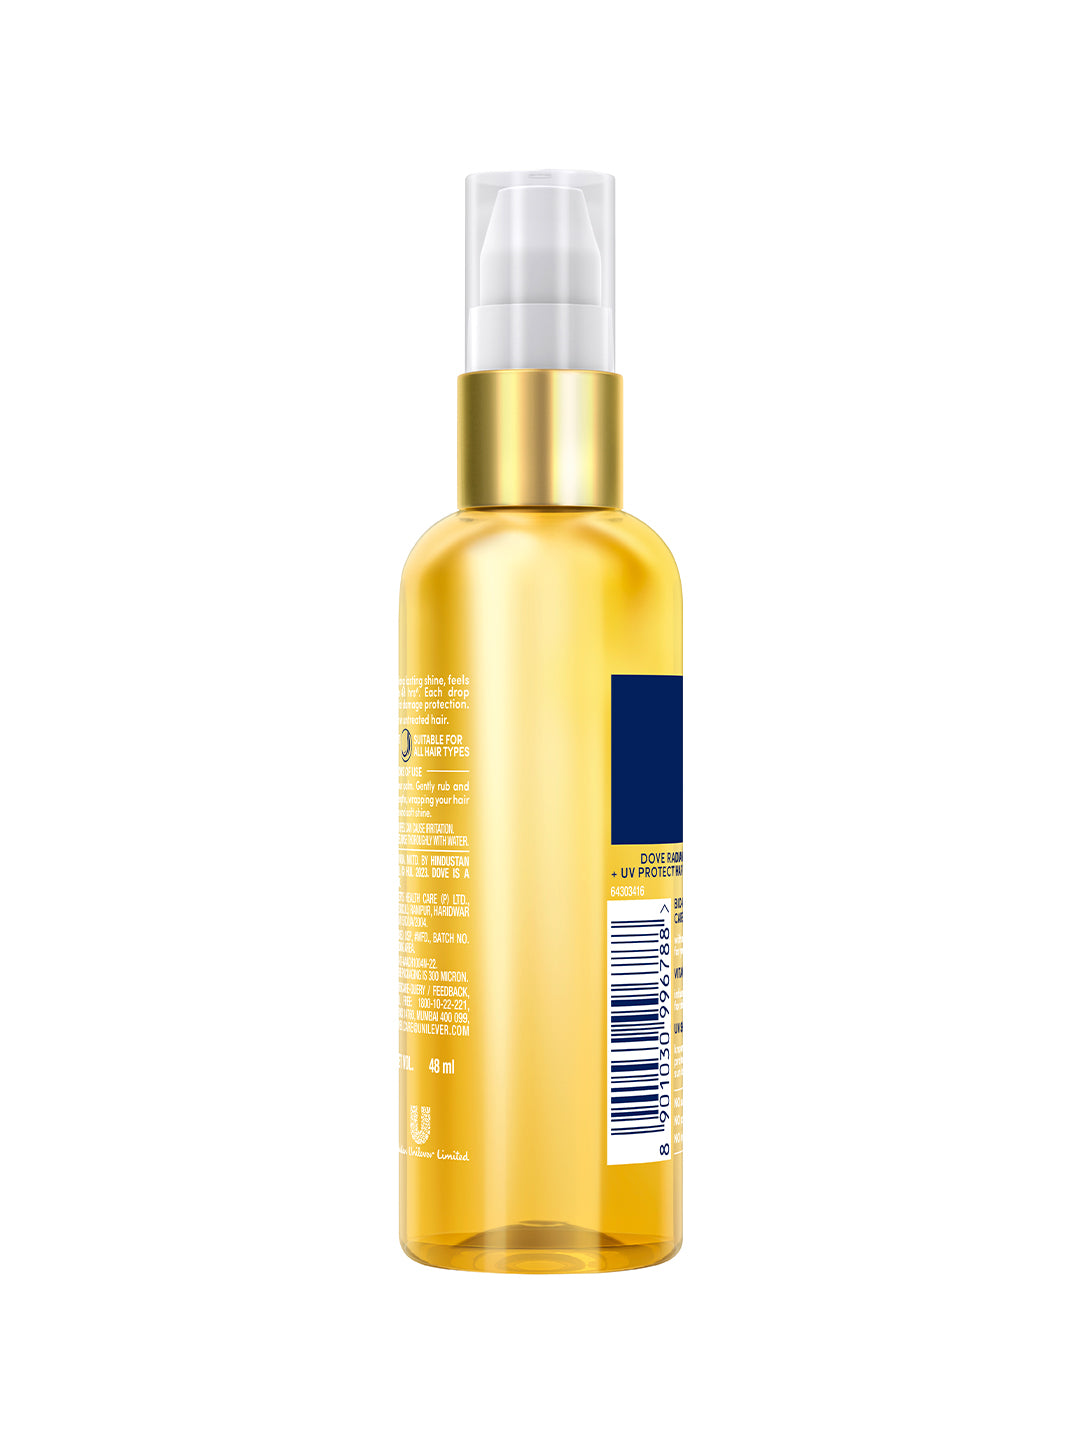 Dove  radiant shine + UV protect  Hair serum 48 ml